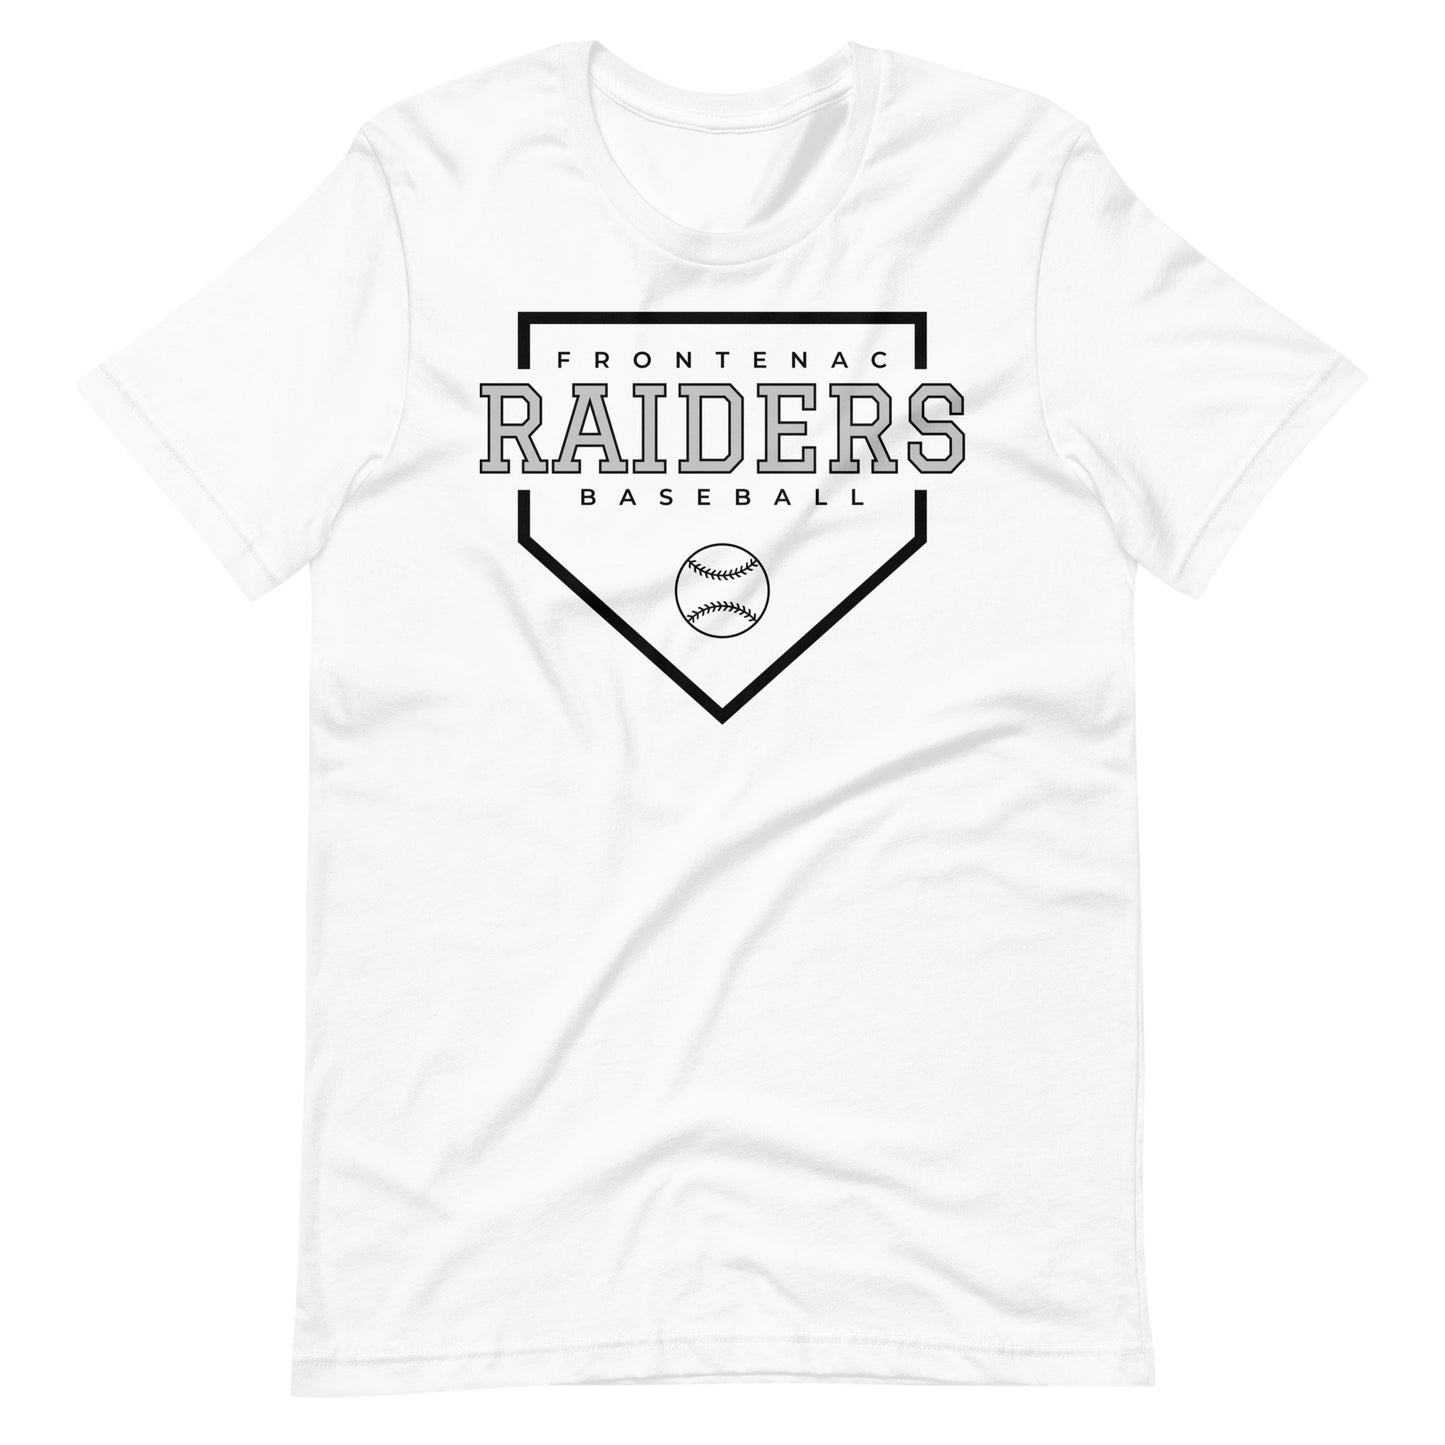 Raiders Baseball Tee